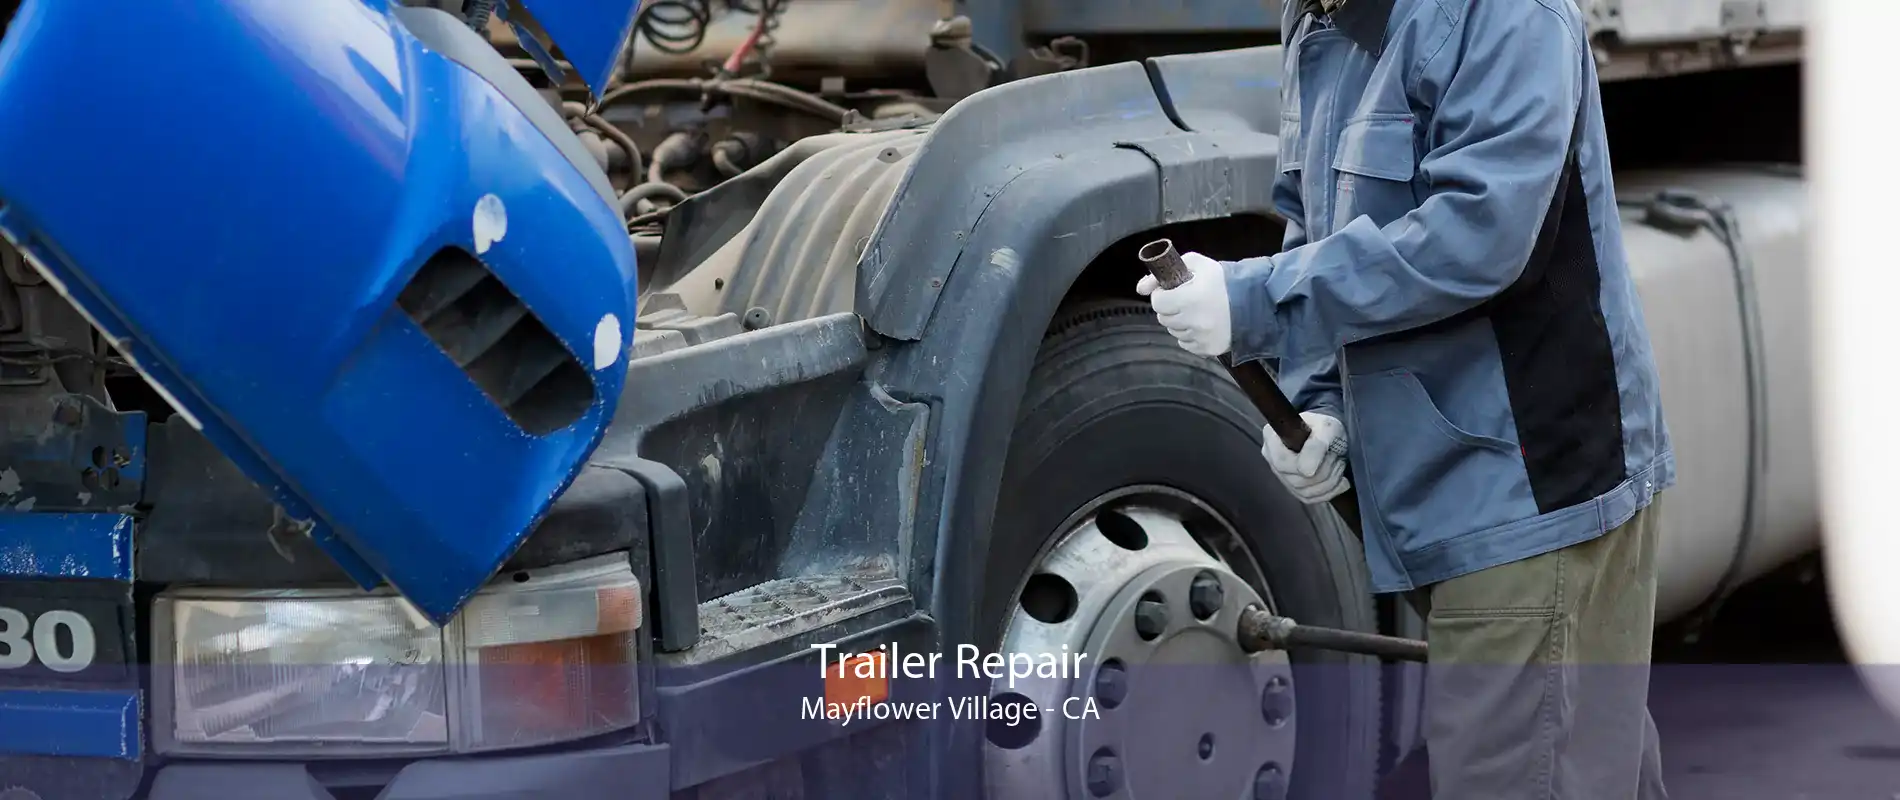 Trailer Repair Mayflower Village - CA